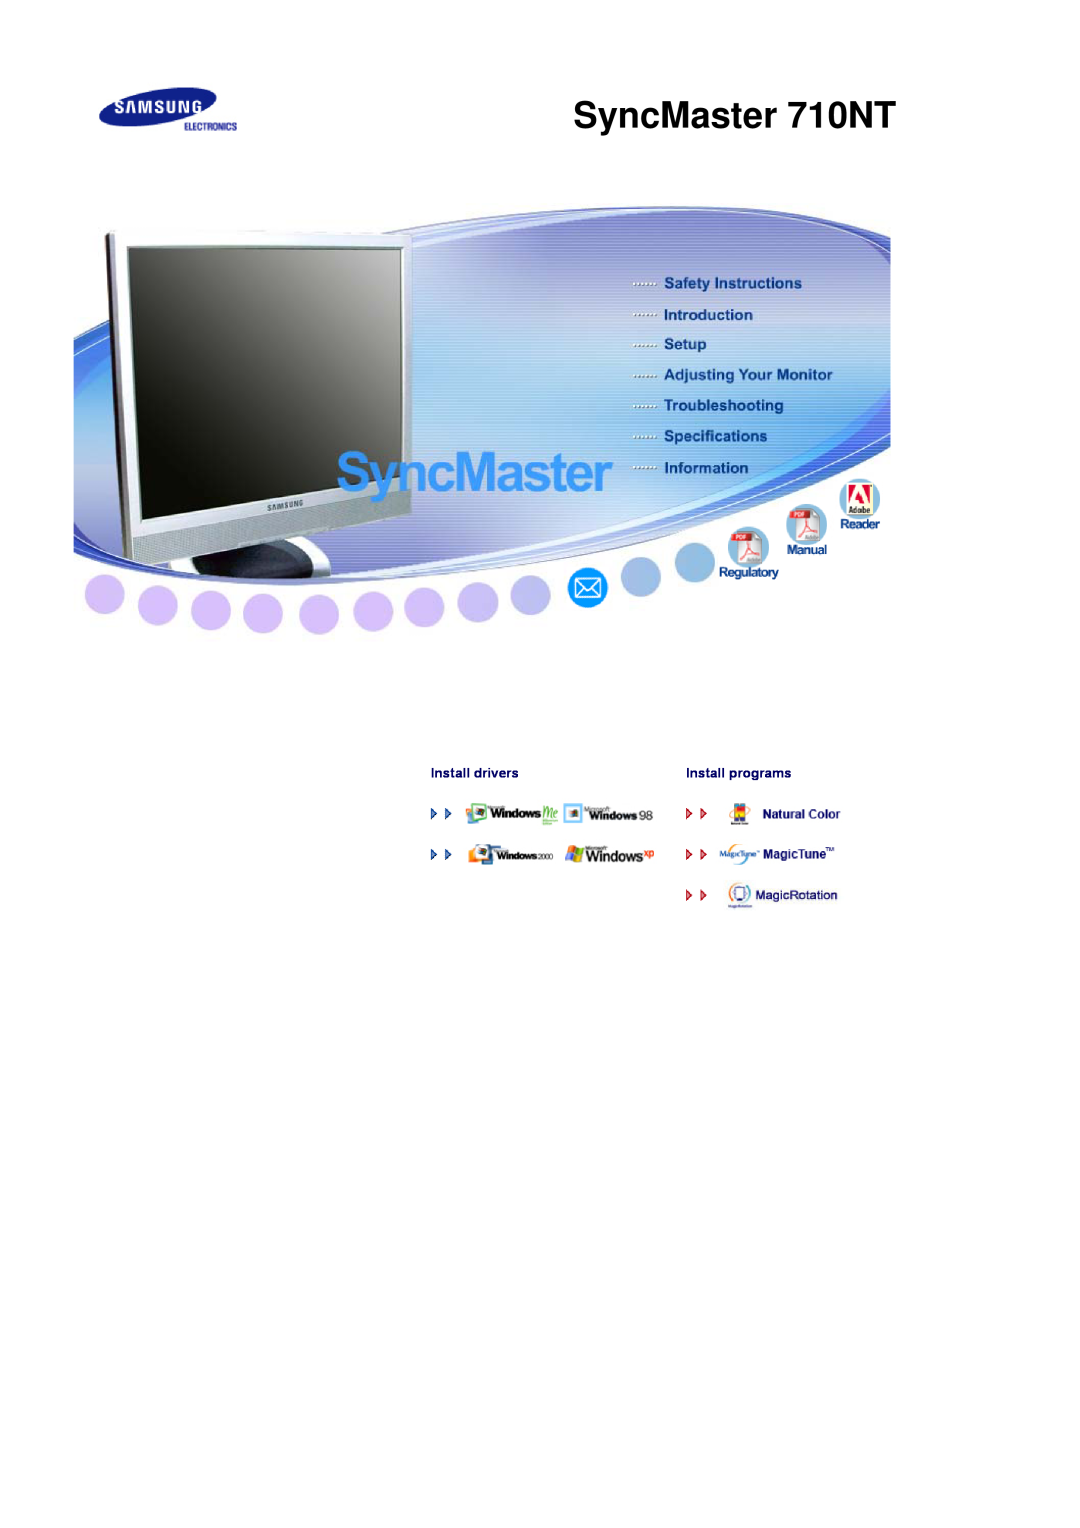 Samsung manual SyncMaster 710NT, Install drivers, Install programs 